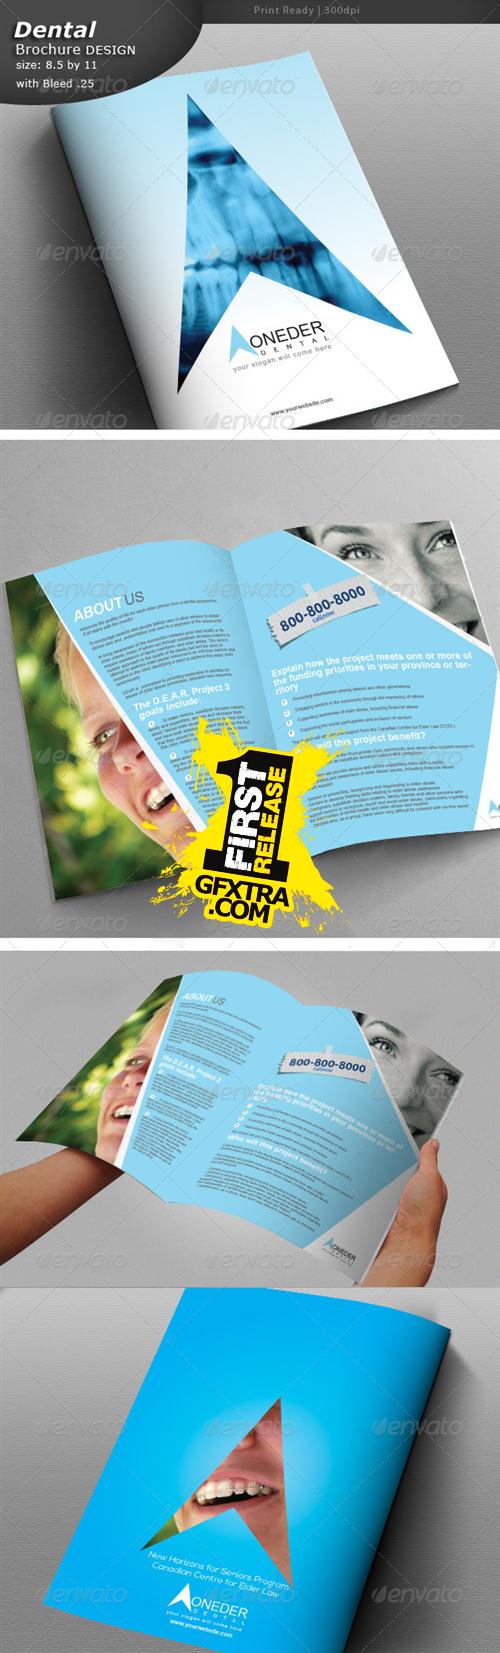 GraphicRiver - Dental Brochure Design